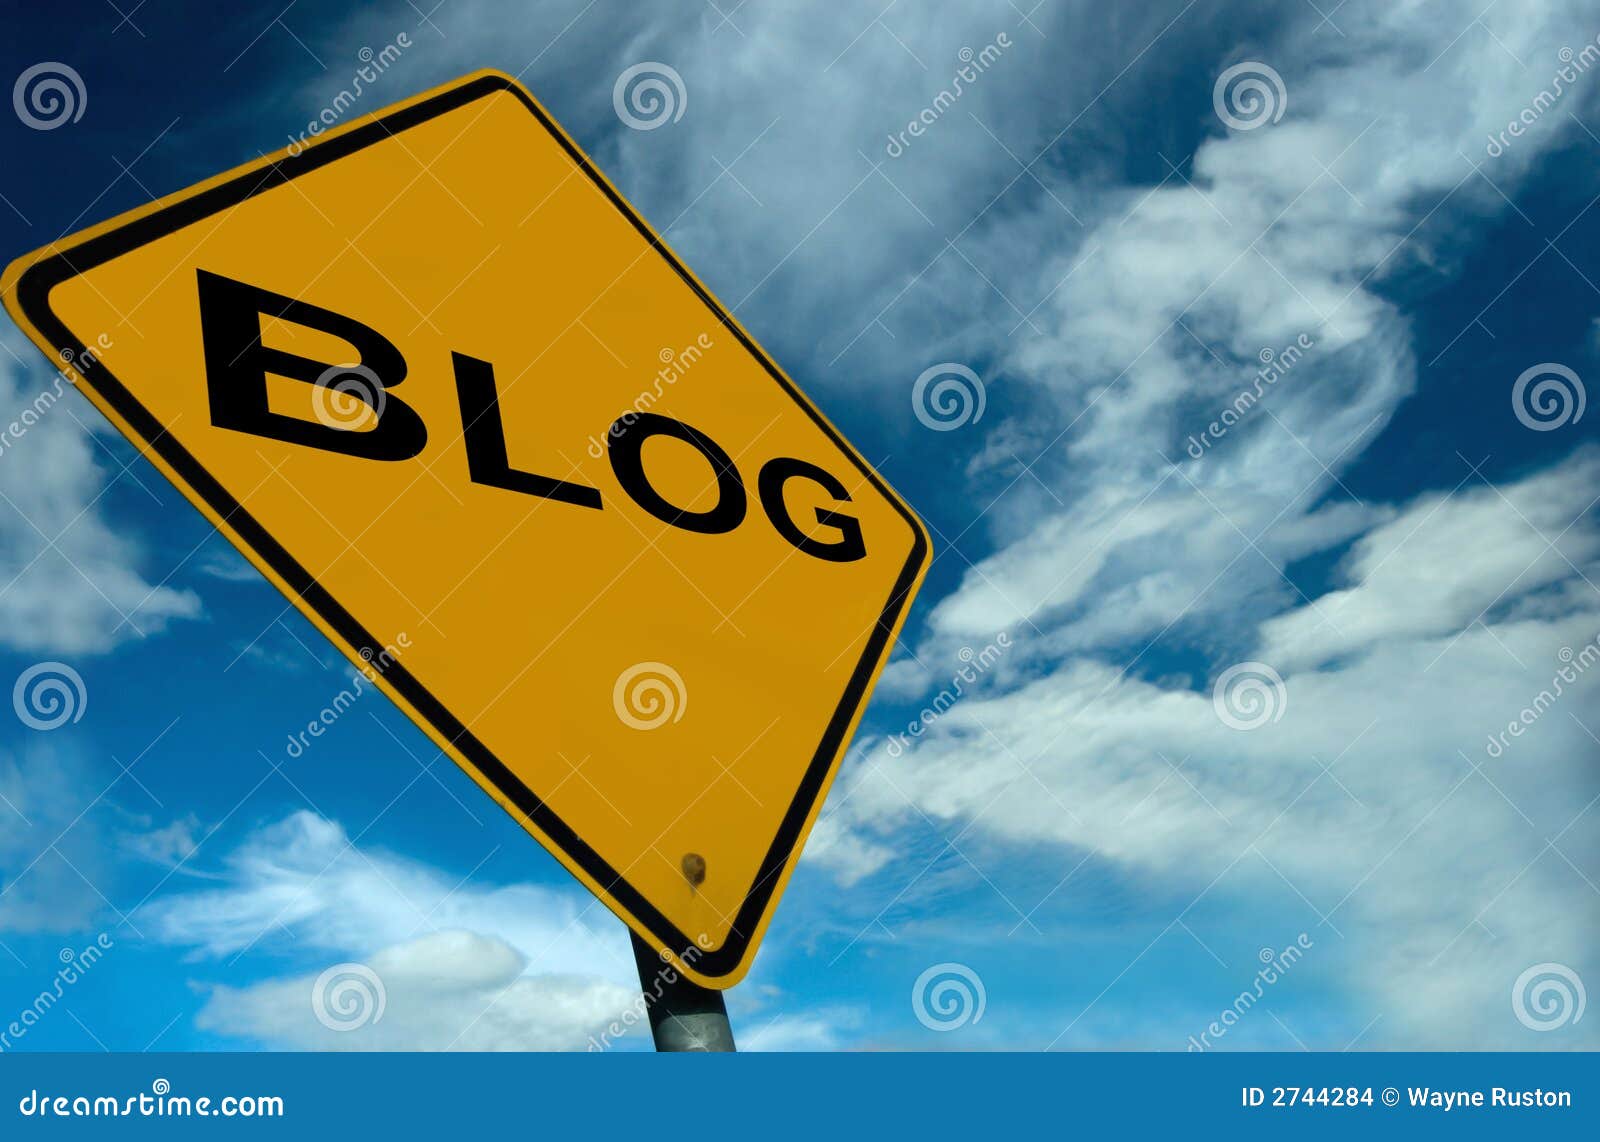 blog sign